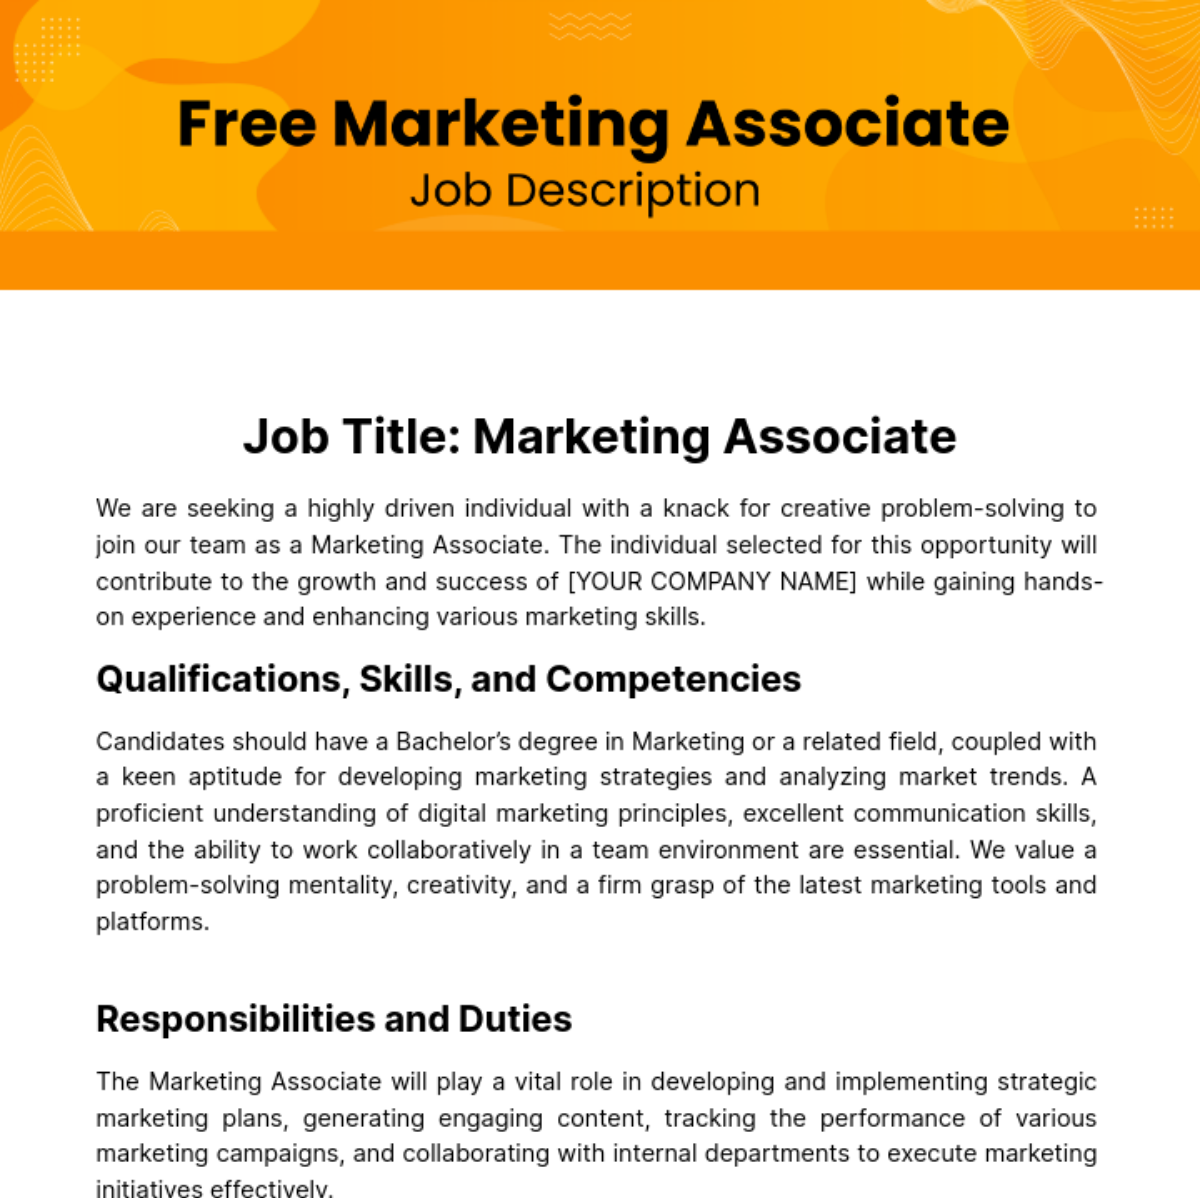 Free Marketing Associate Job Description Template